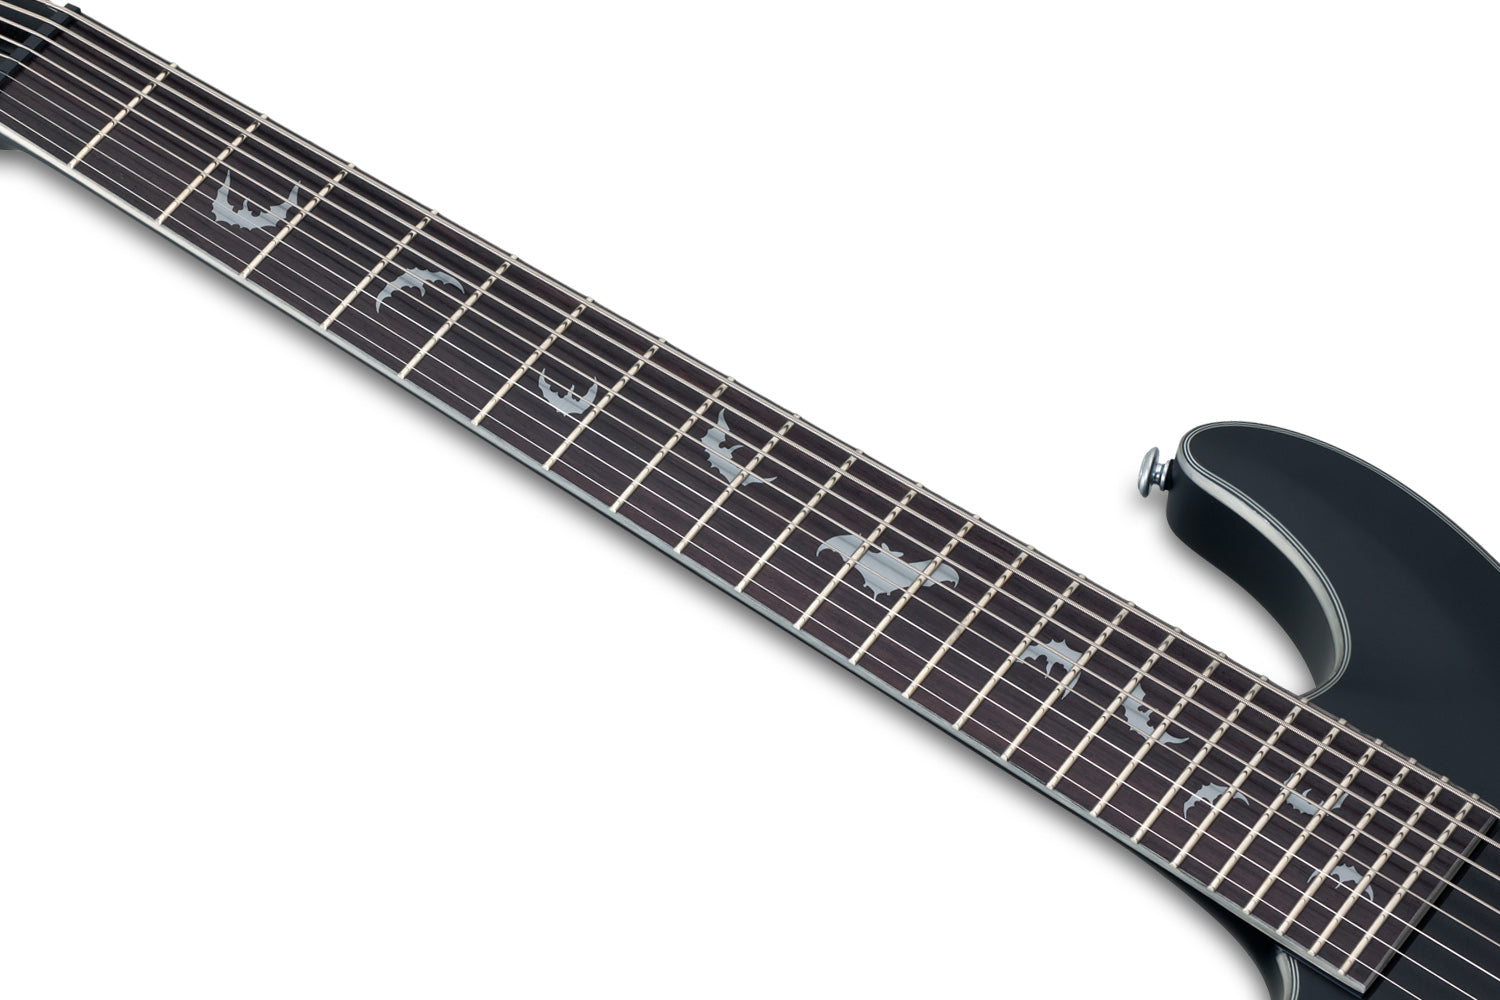 Schecter DAMIEN PTM 8 LH SBK LH Satin Black 8 String Guitar with EMG 81, 85 Pickups 1188-SHC